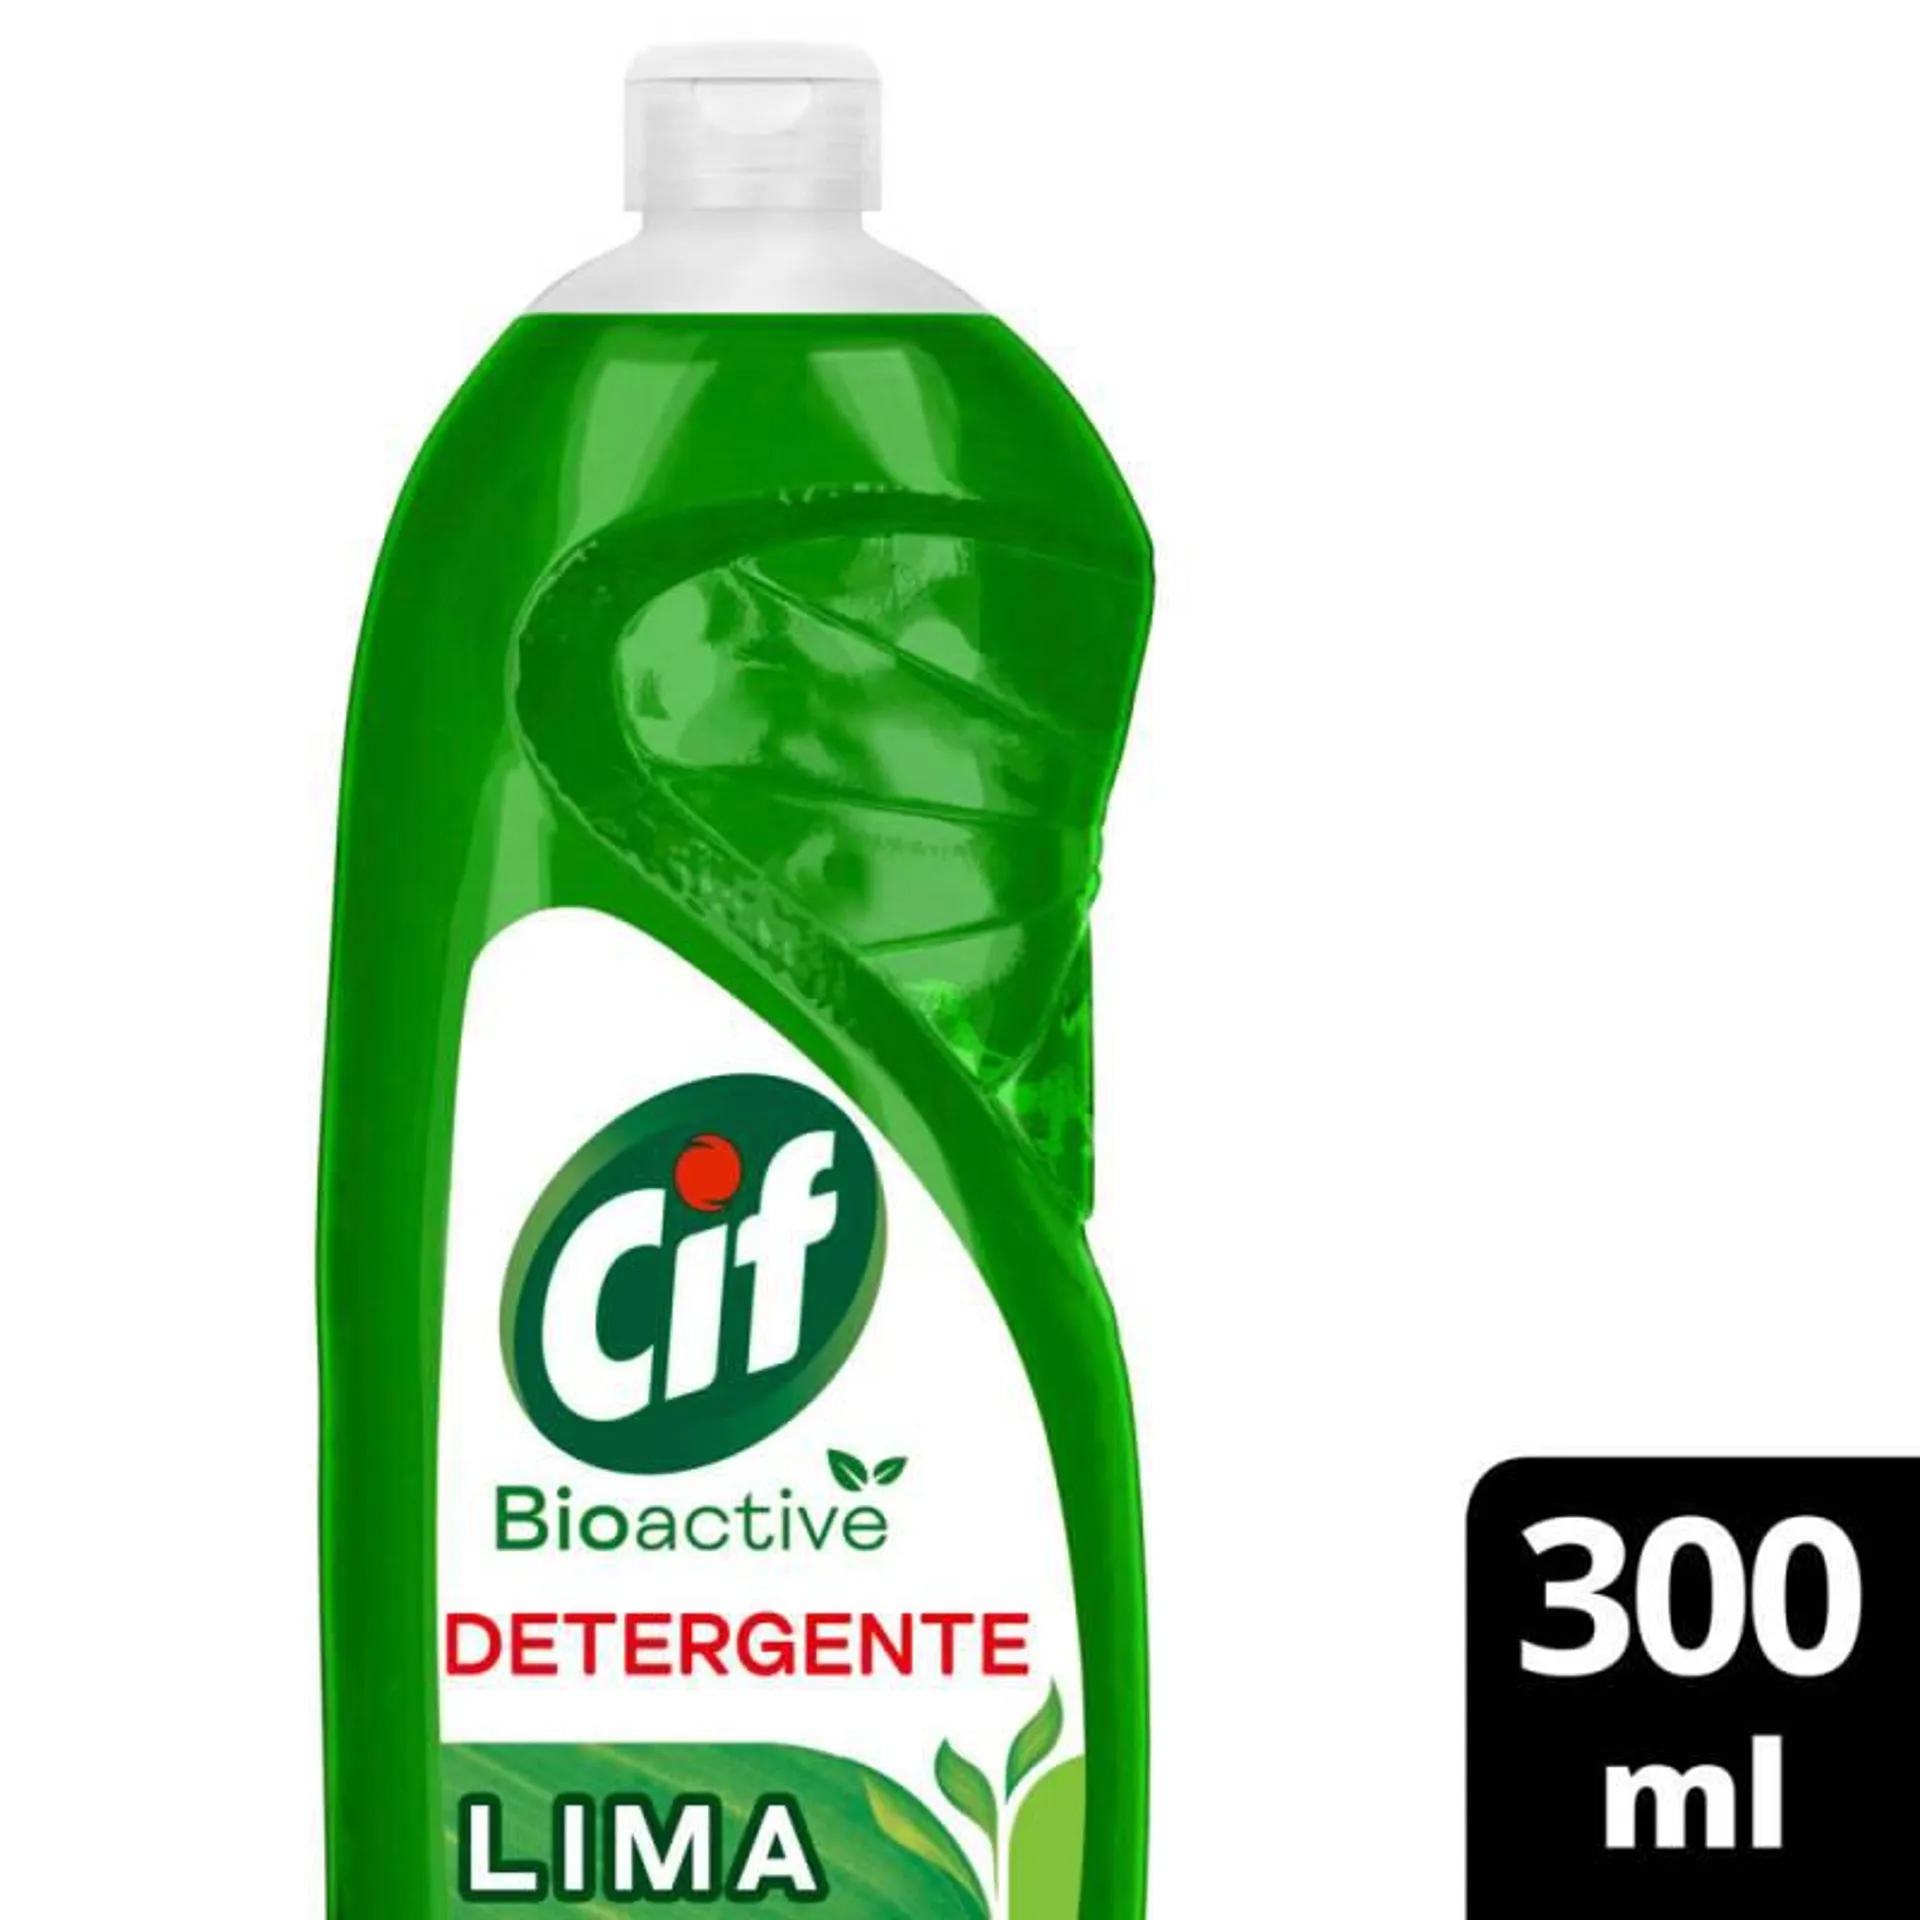 Detergente Liquido Bioactive Lima Cif x 300 cc.